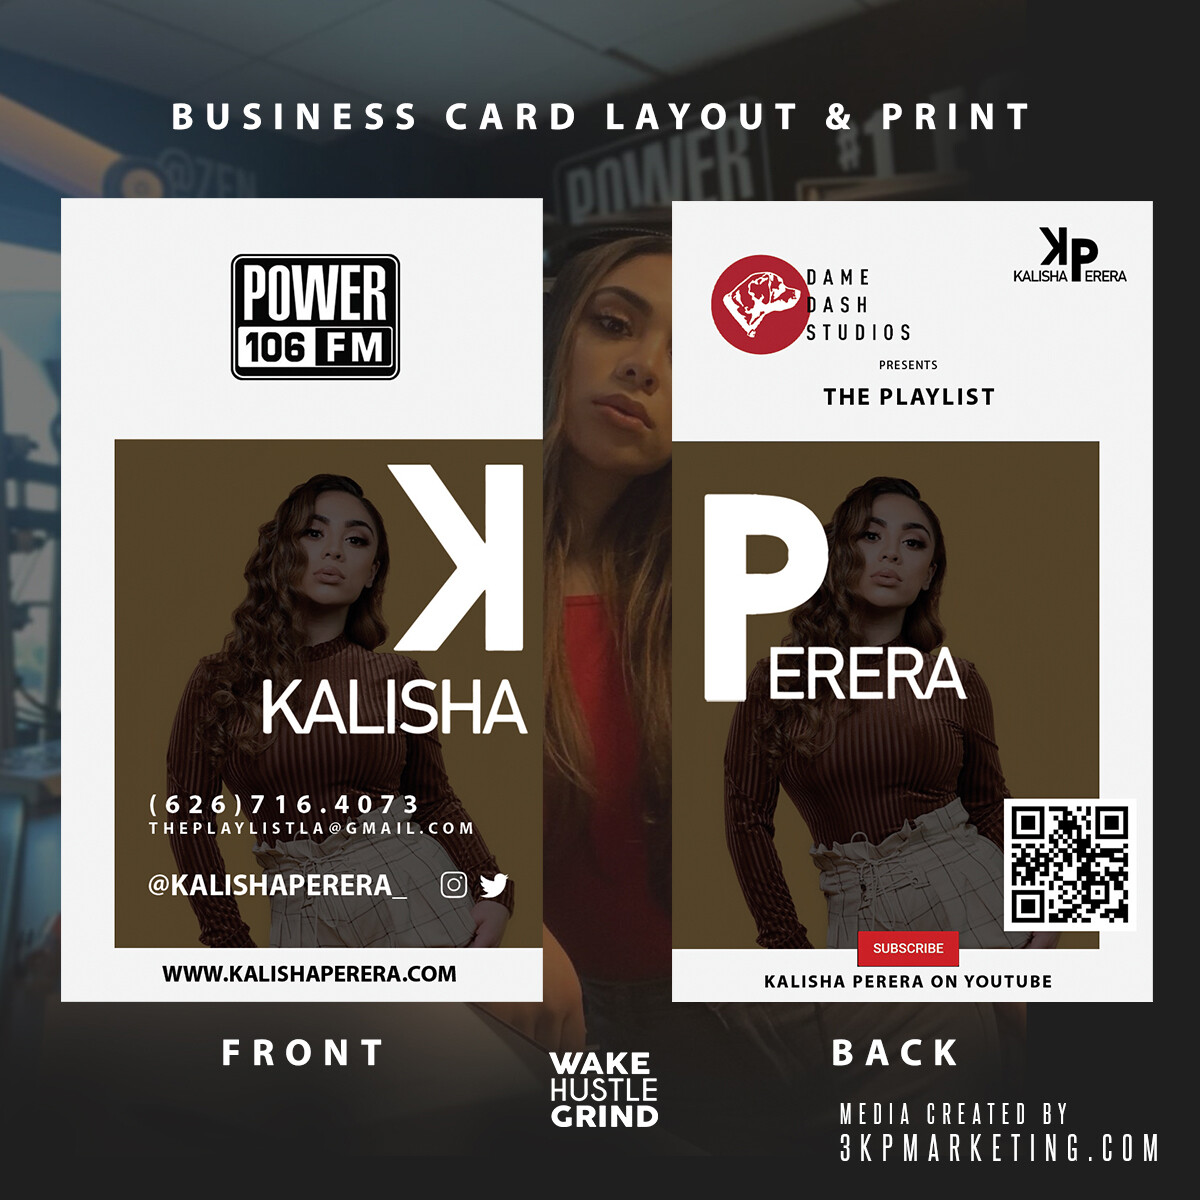 Print + Design 500 Business Cards 16pt Gloss